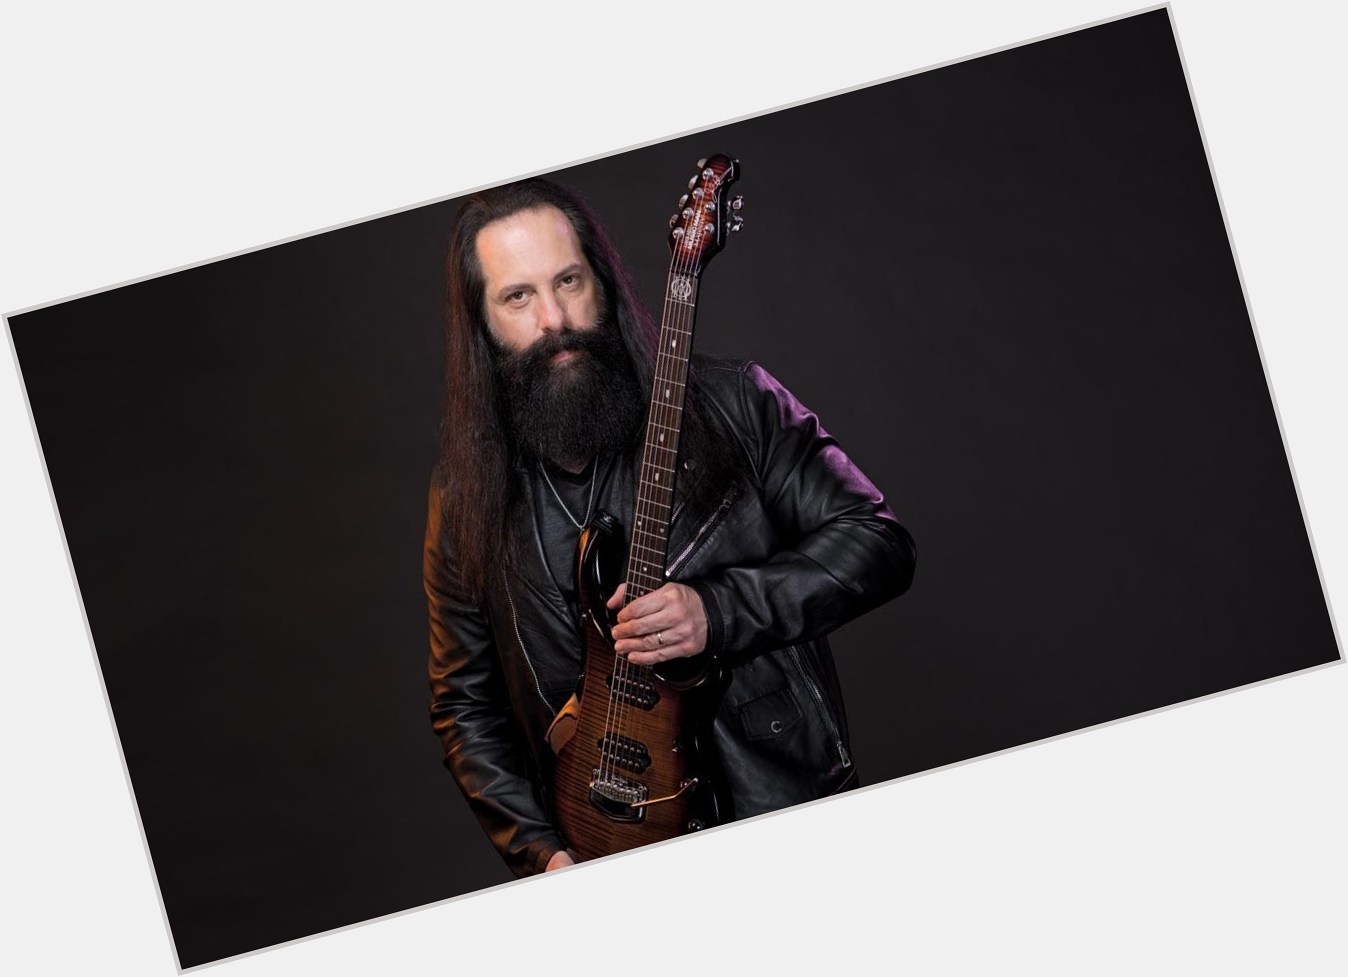 Happy 54th birthday to John Petrucci! 